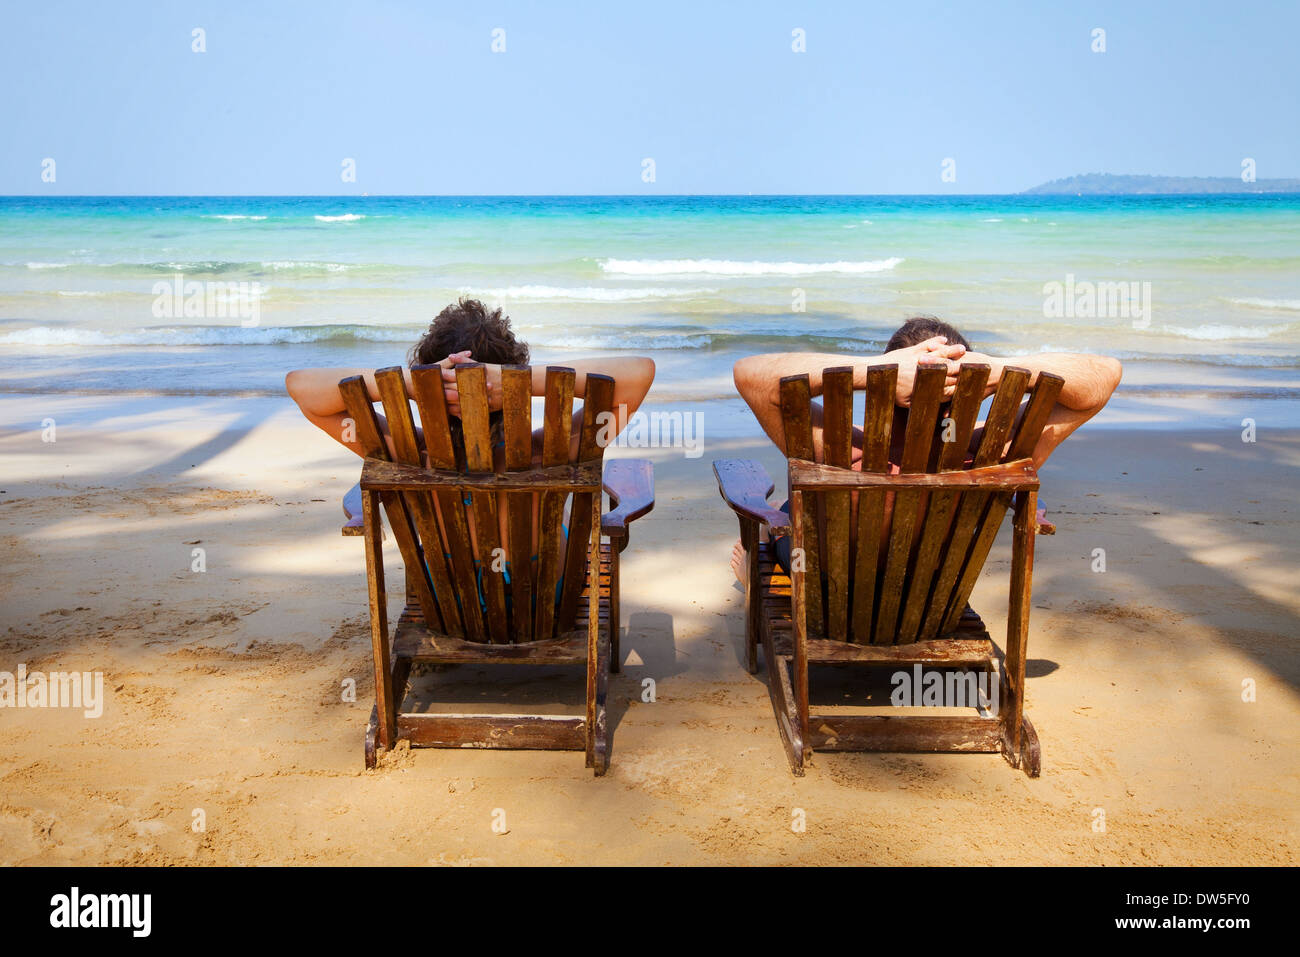 sunbathing on the beach Stock Photo